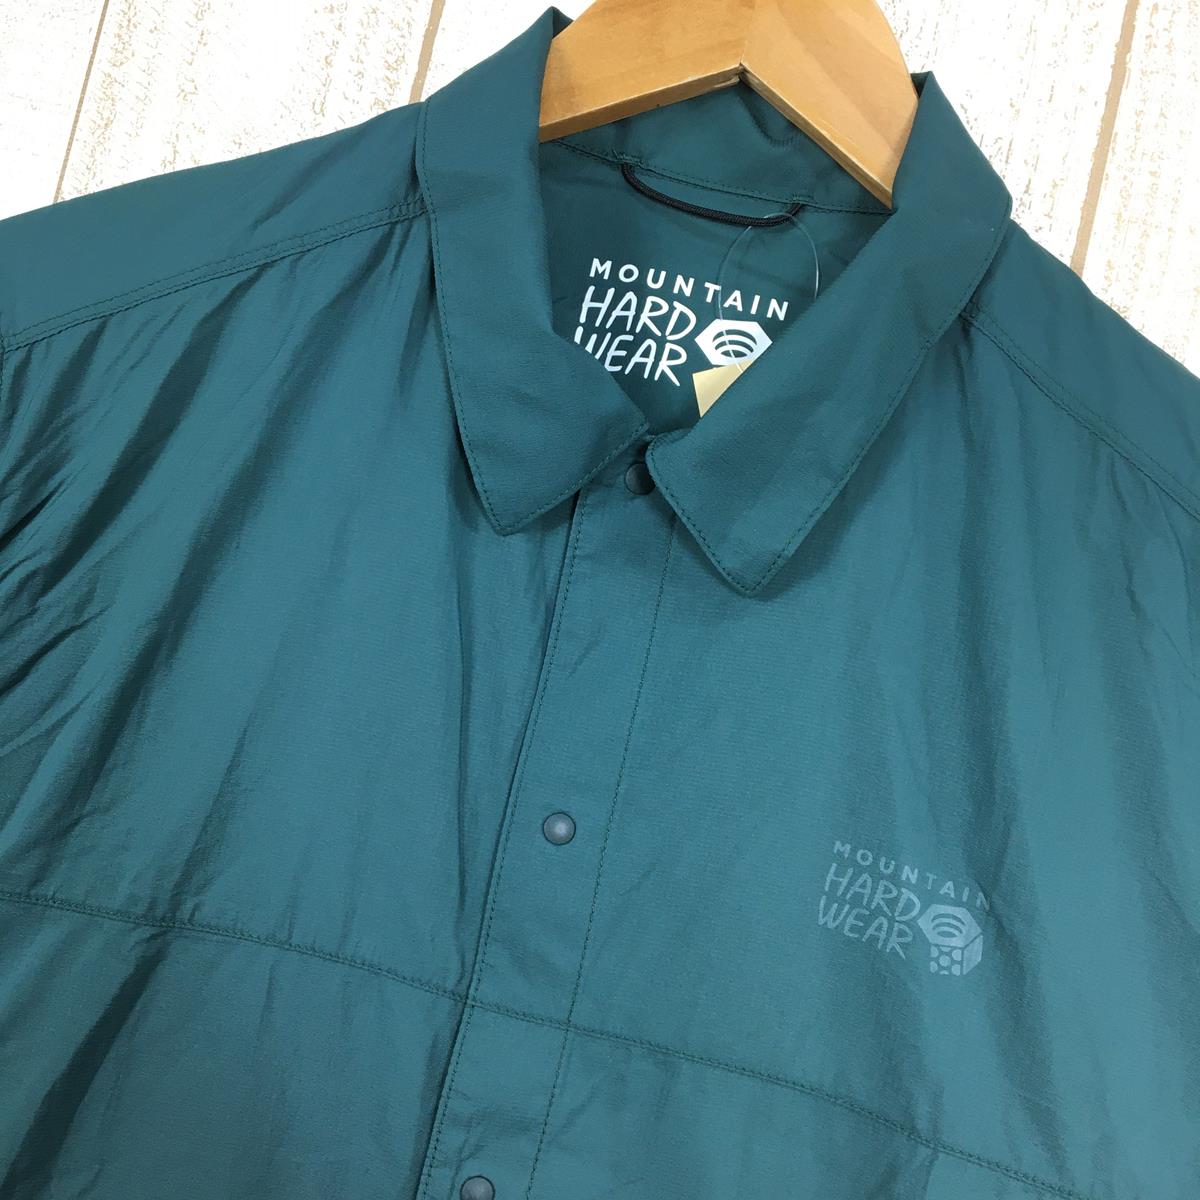 【MEN's S】 マウンテンハードウェア コア エアシェル シャツ ジャケット Kor AirShell Shirt Jacket ウィンドシェル MOUNTAIN HARDWEAR OE0400 318 Aqua Green グリーン系